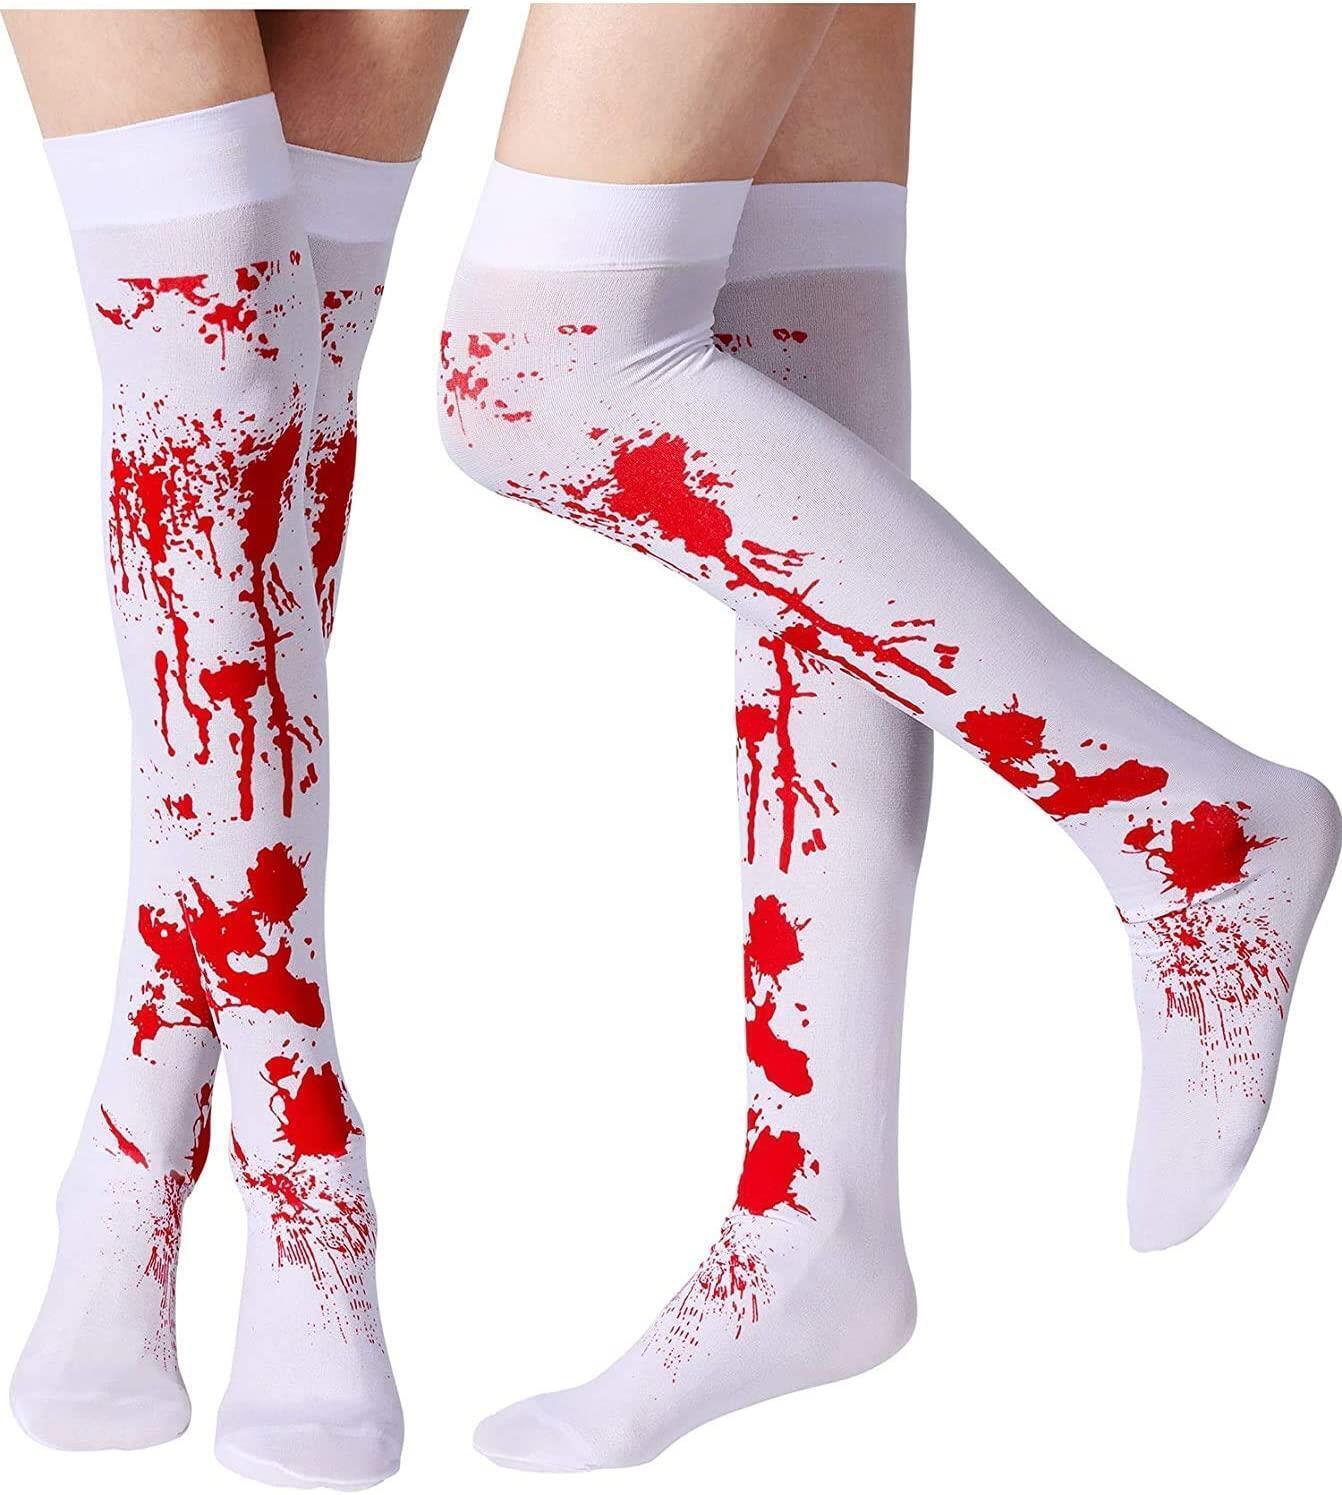 Blood-Stained Halloween Over Knee Stockings Socks Free 28ml Tube Fake Blood